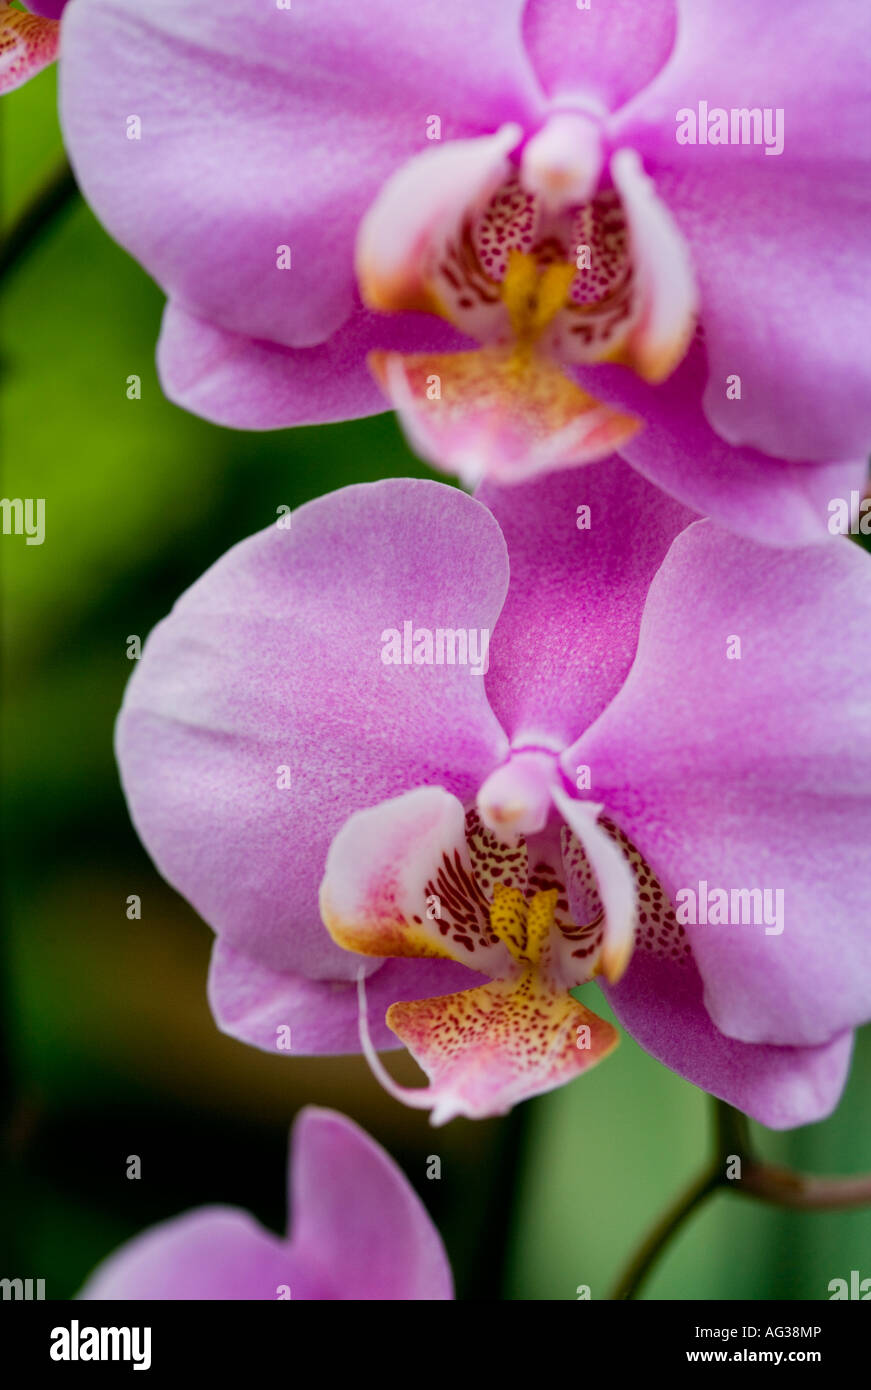 Rosa Orchidee Blume im detail Stockfoto